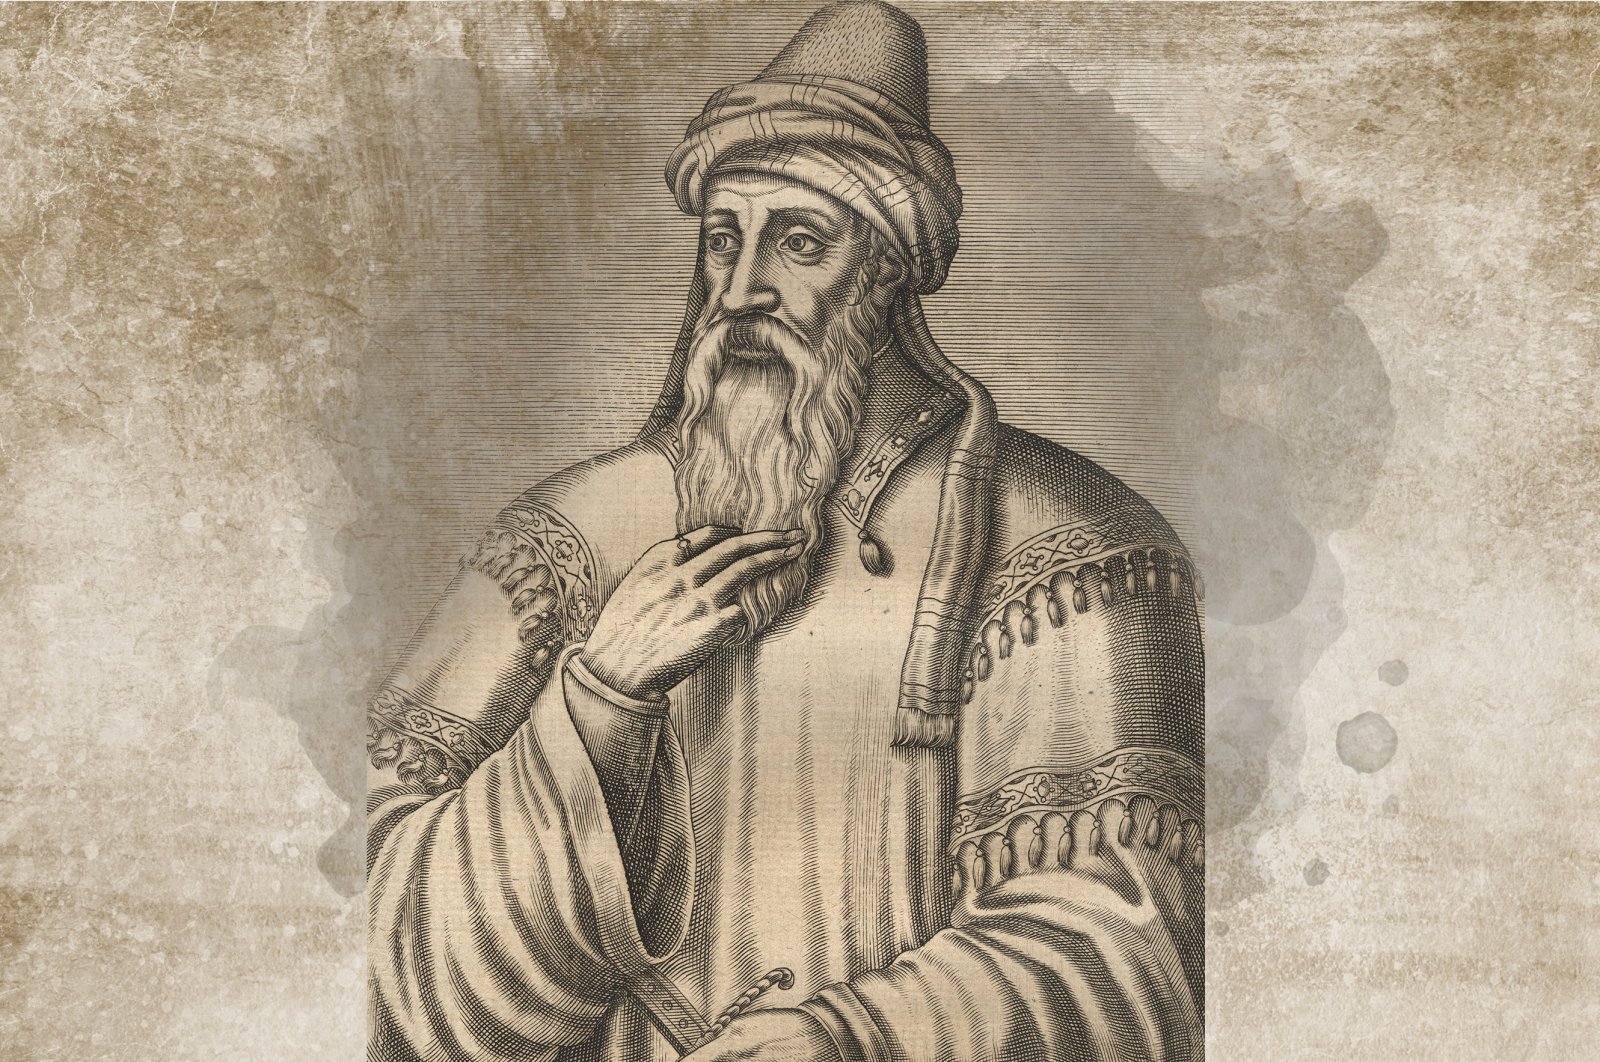 A photo illustration by Daily Sabah's Büşra Öztürk shows great Muslim leader Salah ad-Din Ayyubi, or better known in the West as Saladin. (Photo by Daily Sabah's Büşra Öztürk)